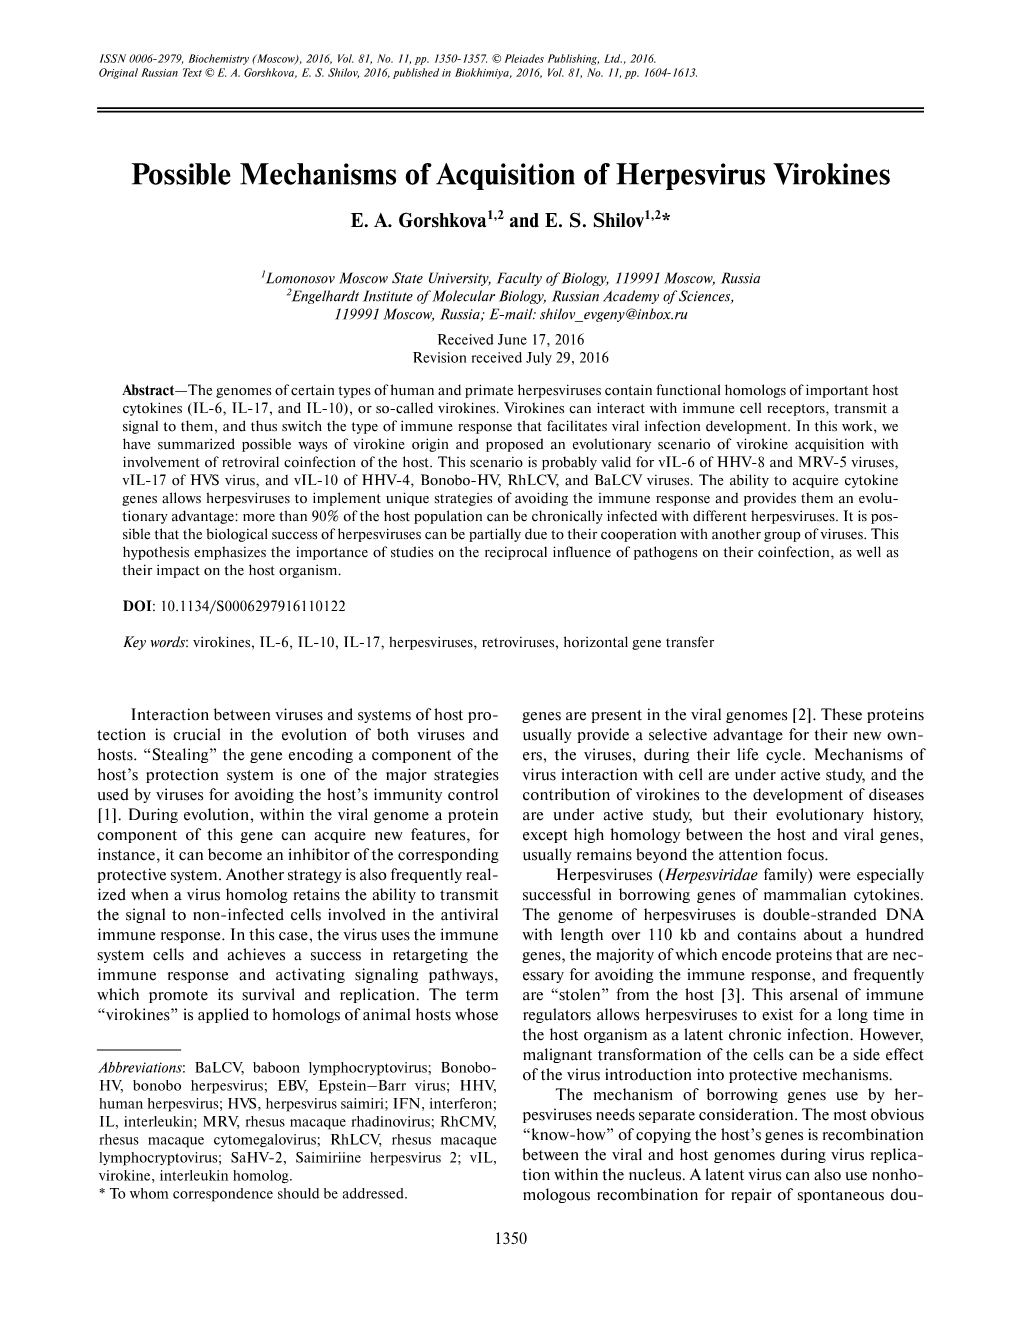 Possible Mechanisms of Acquisition of Herpesvirus Virokines